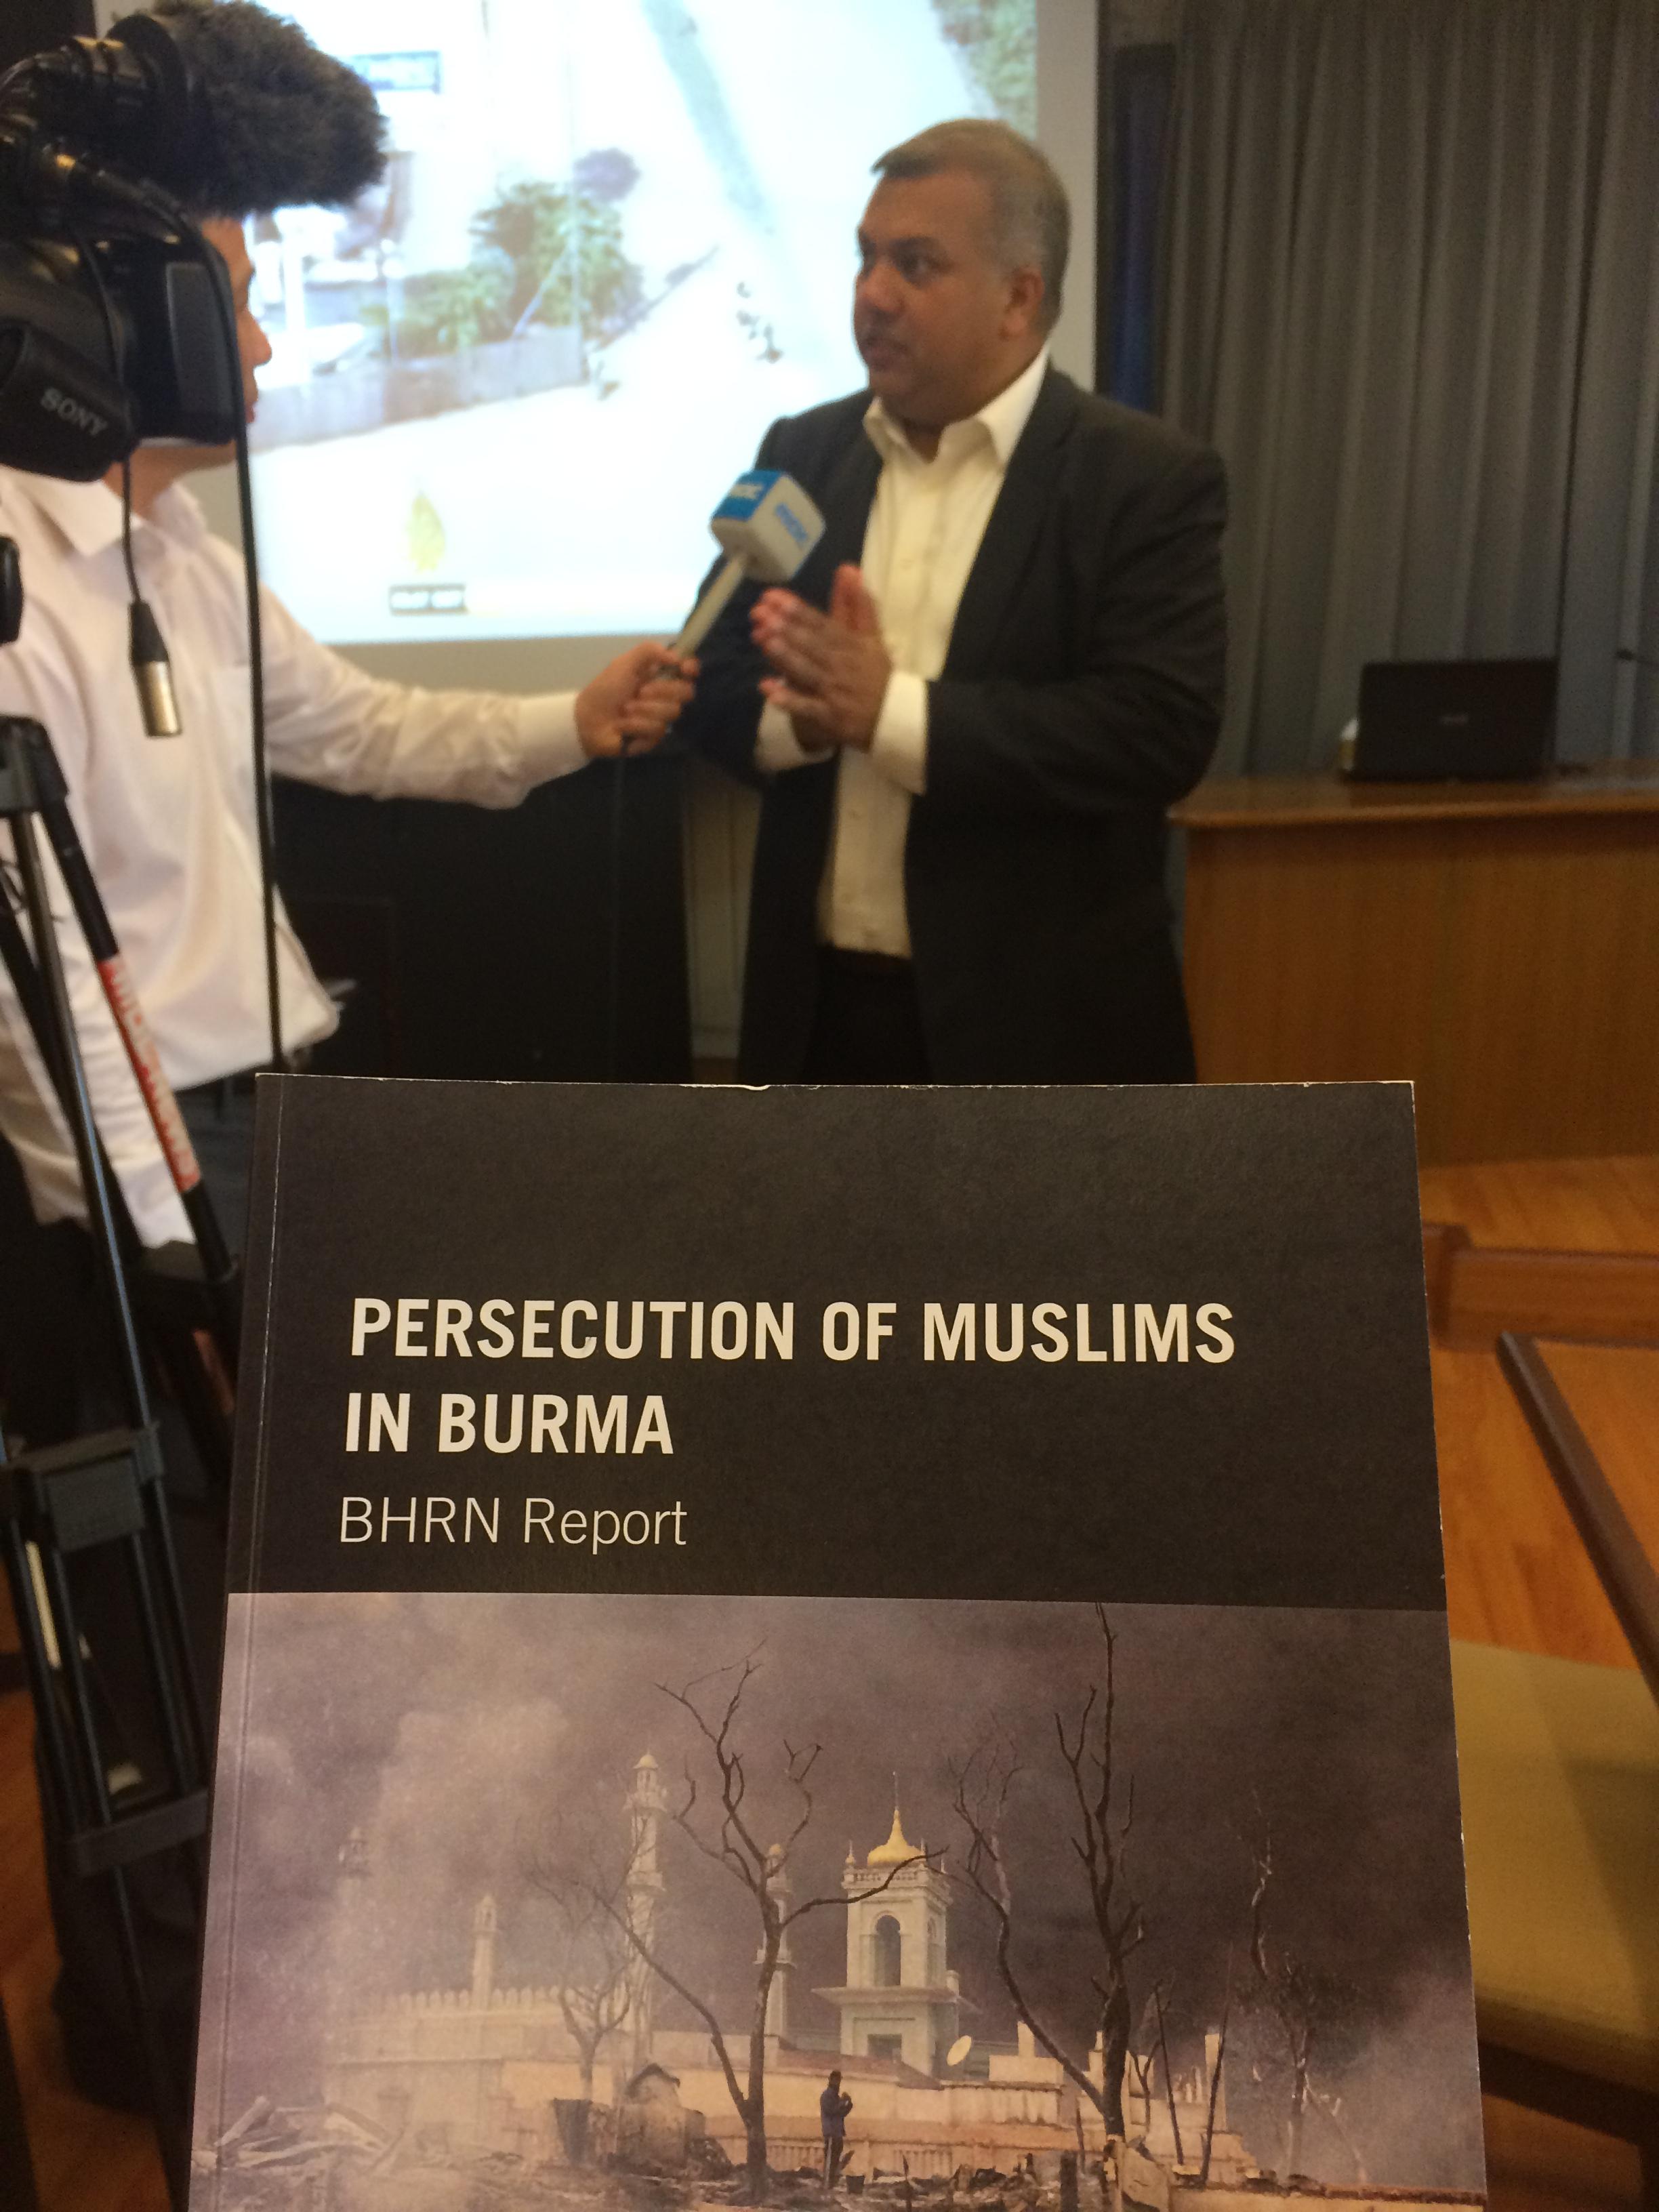 Jaringan Hak Asasi Manusia Burma merilis laporan soal persekusi terhadap Muslim di Myanmar. (Foto: K